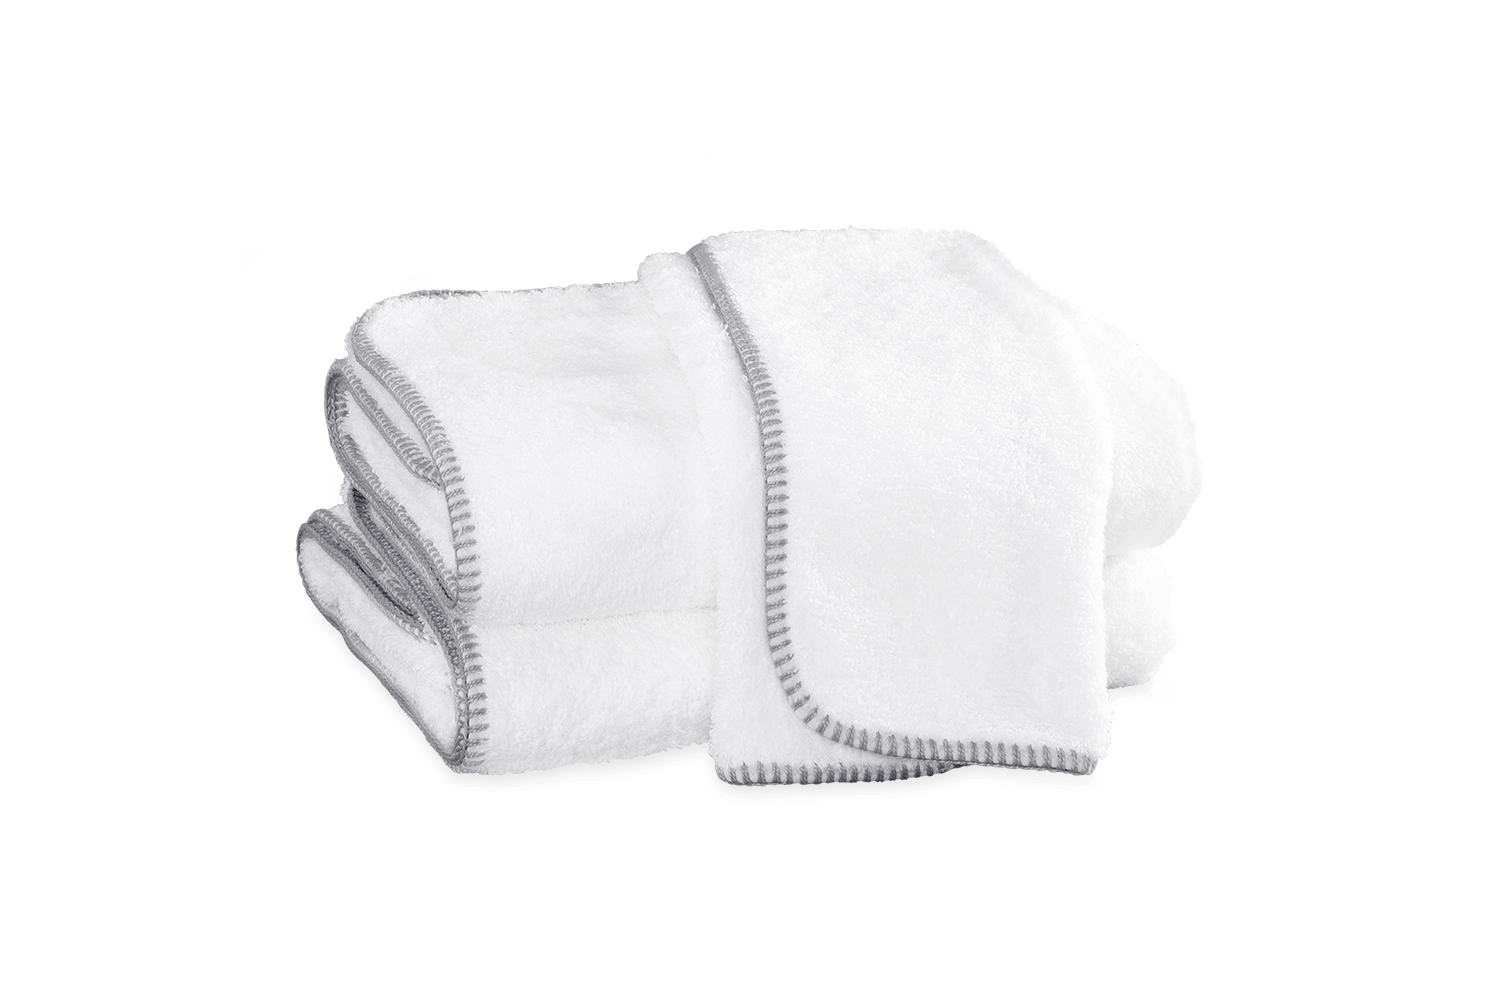 Matouk - Whipstitch Luxury Towels